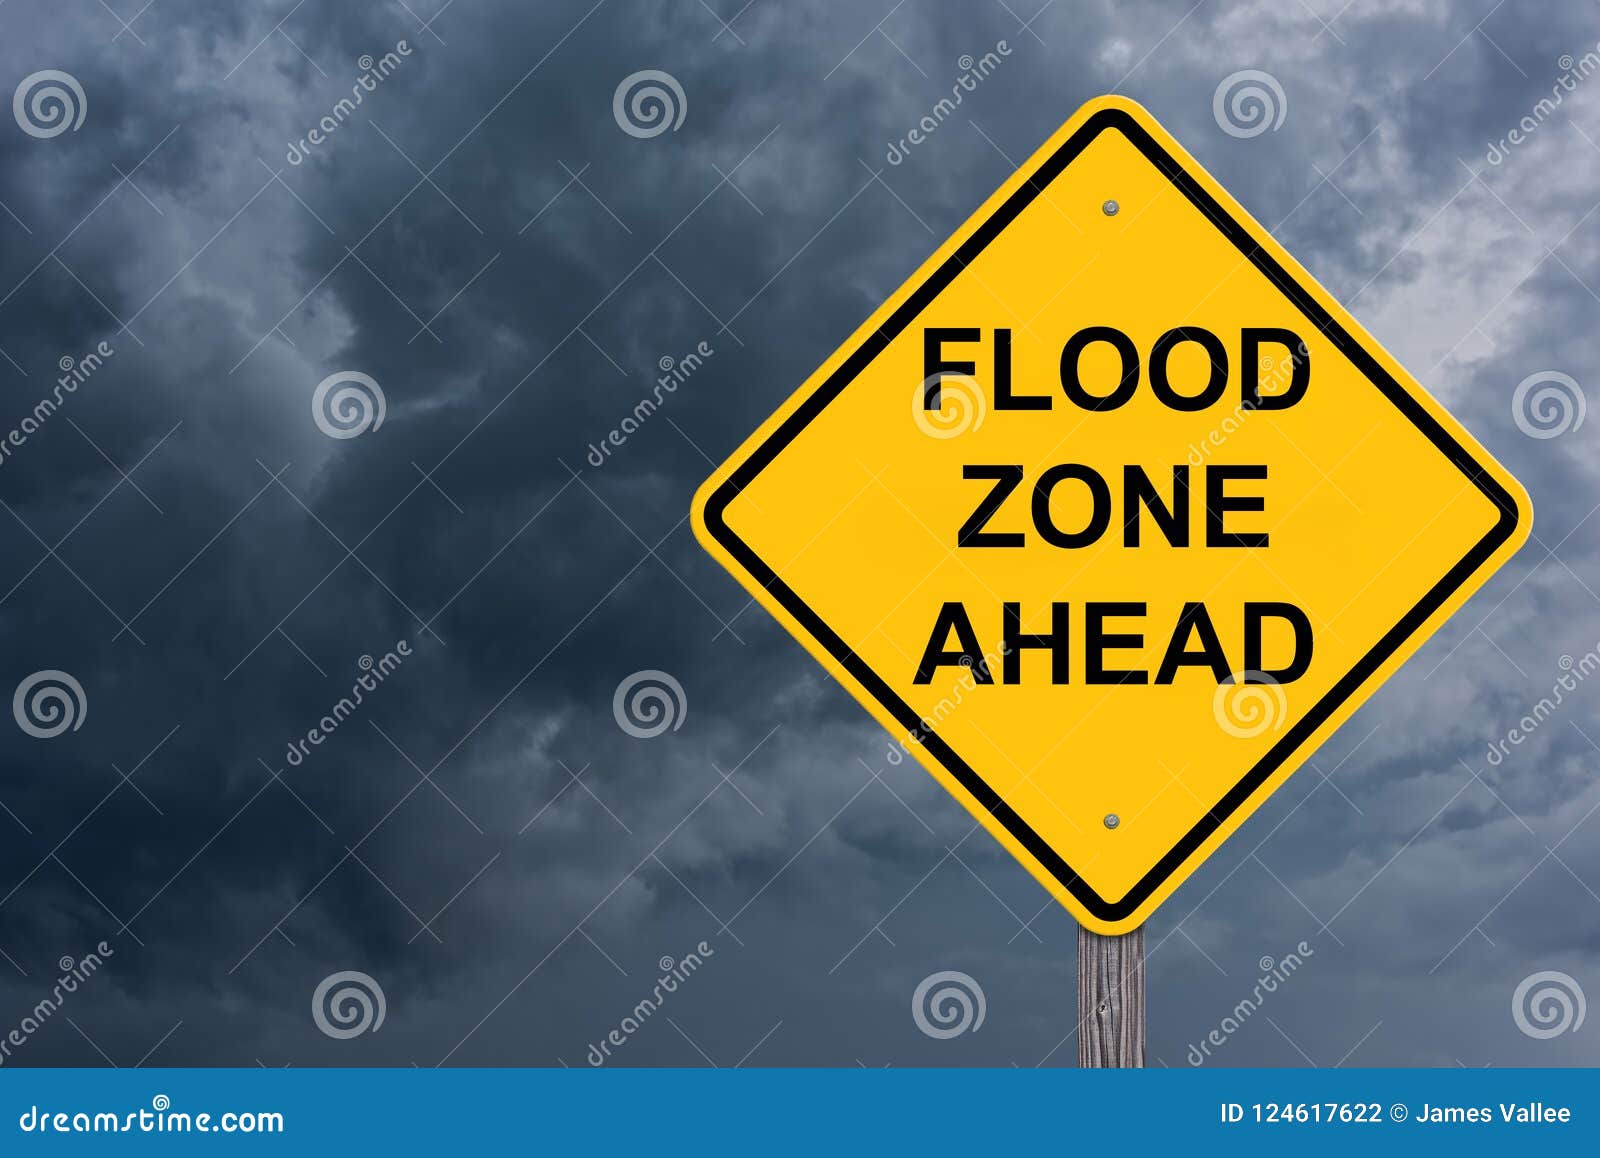 flood zone ahead caution sign